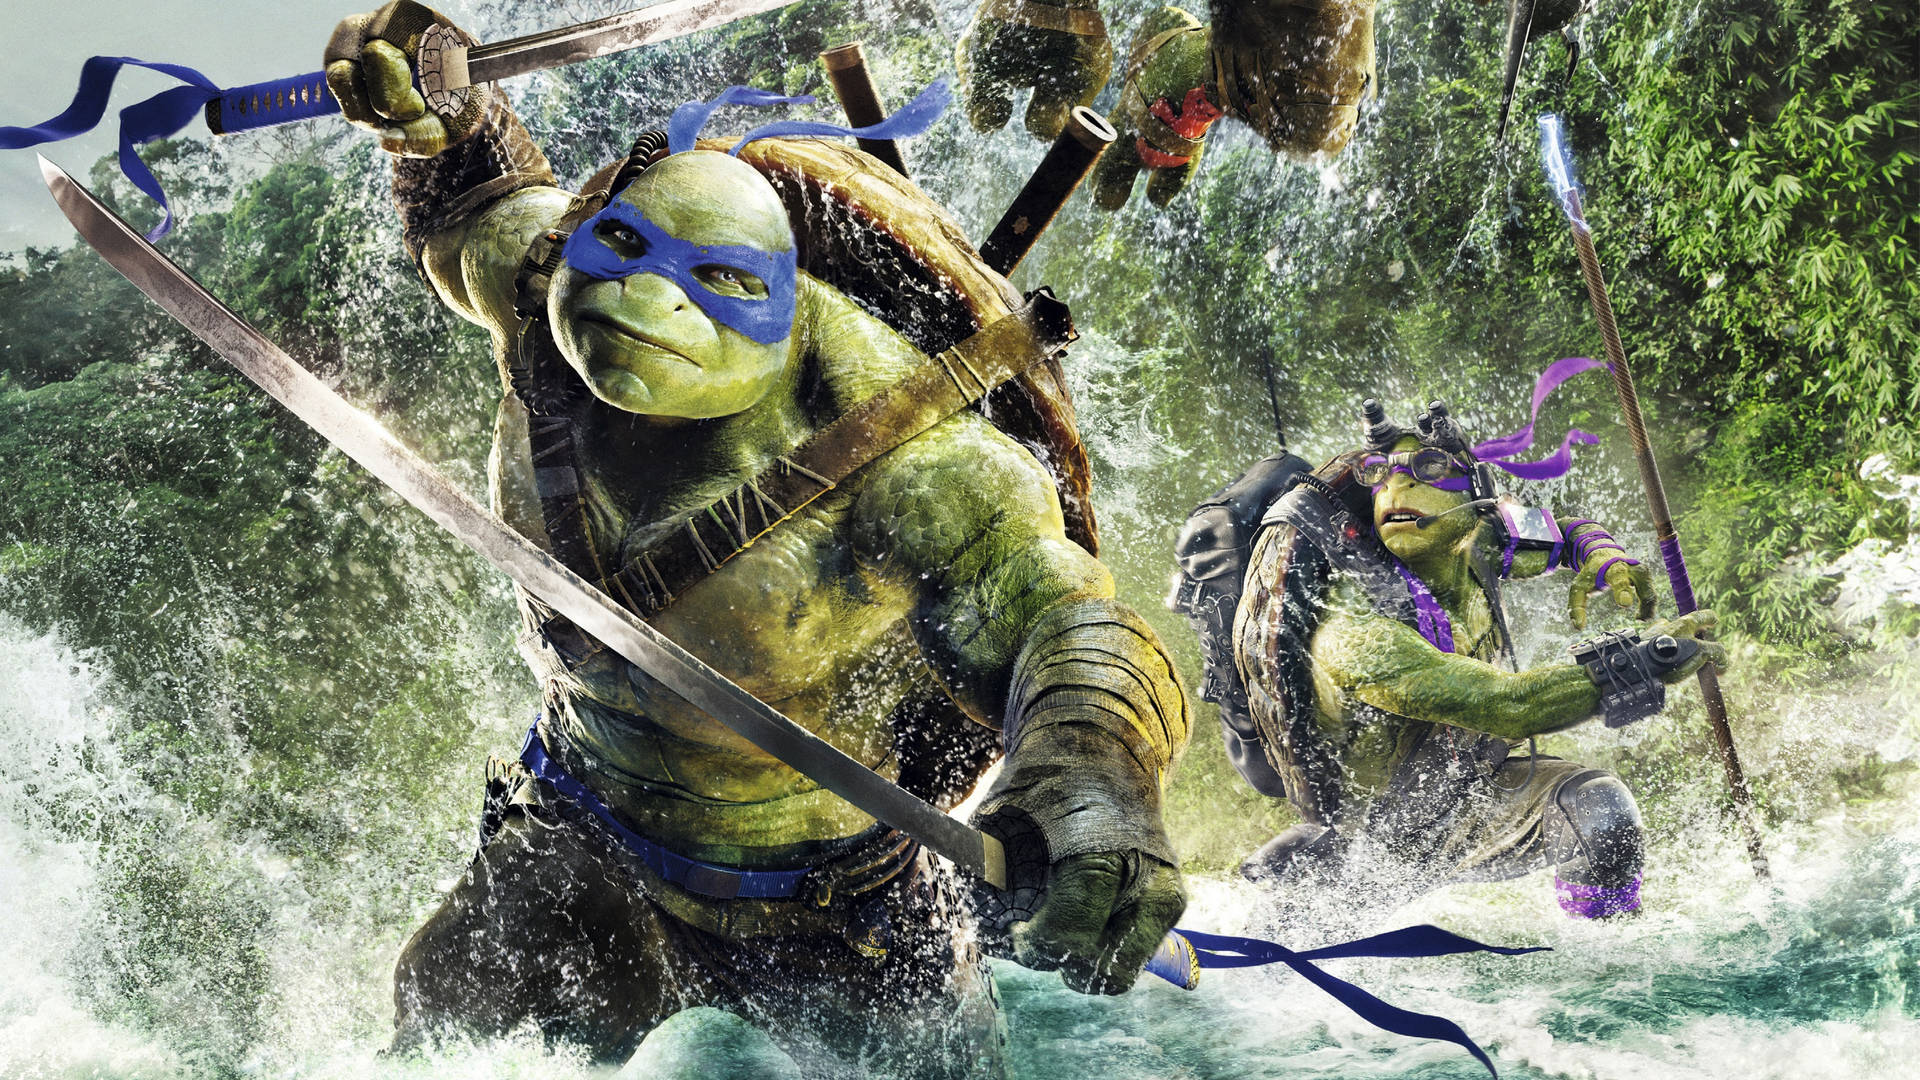 300 Teenage Mutant Ninja Turtles HD Wallpapers and Backgrounds